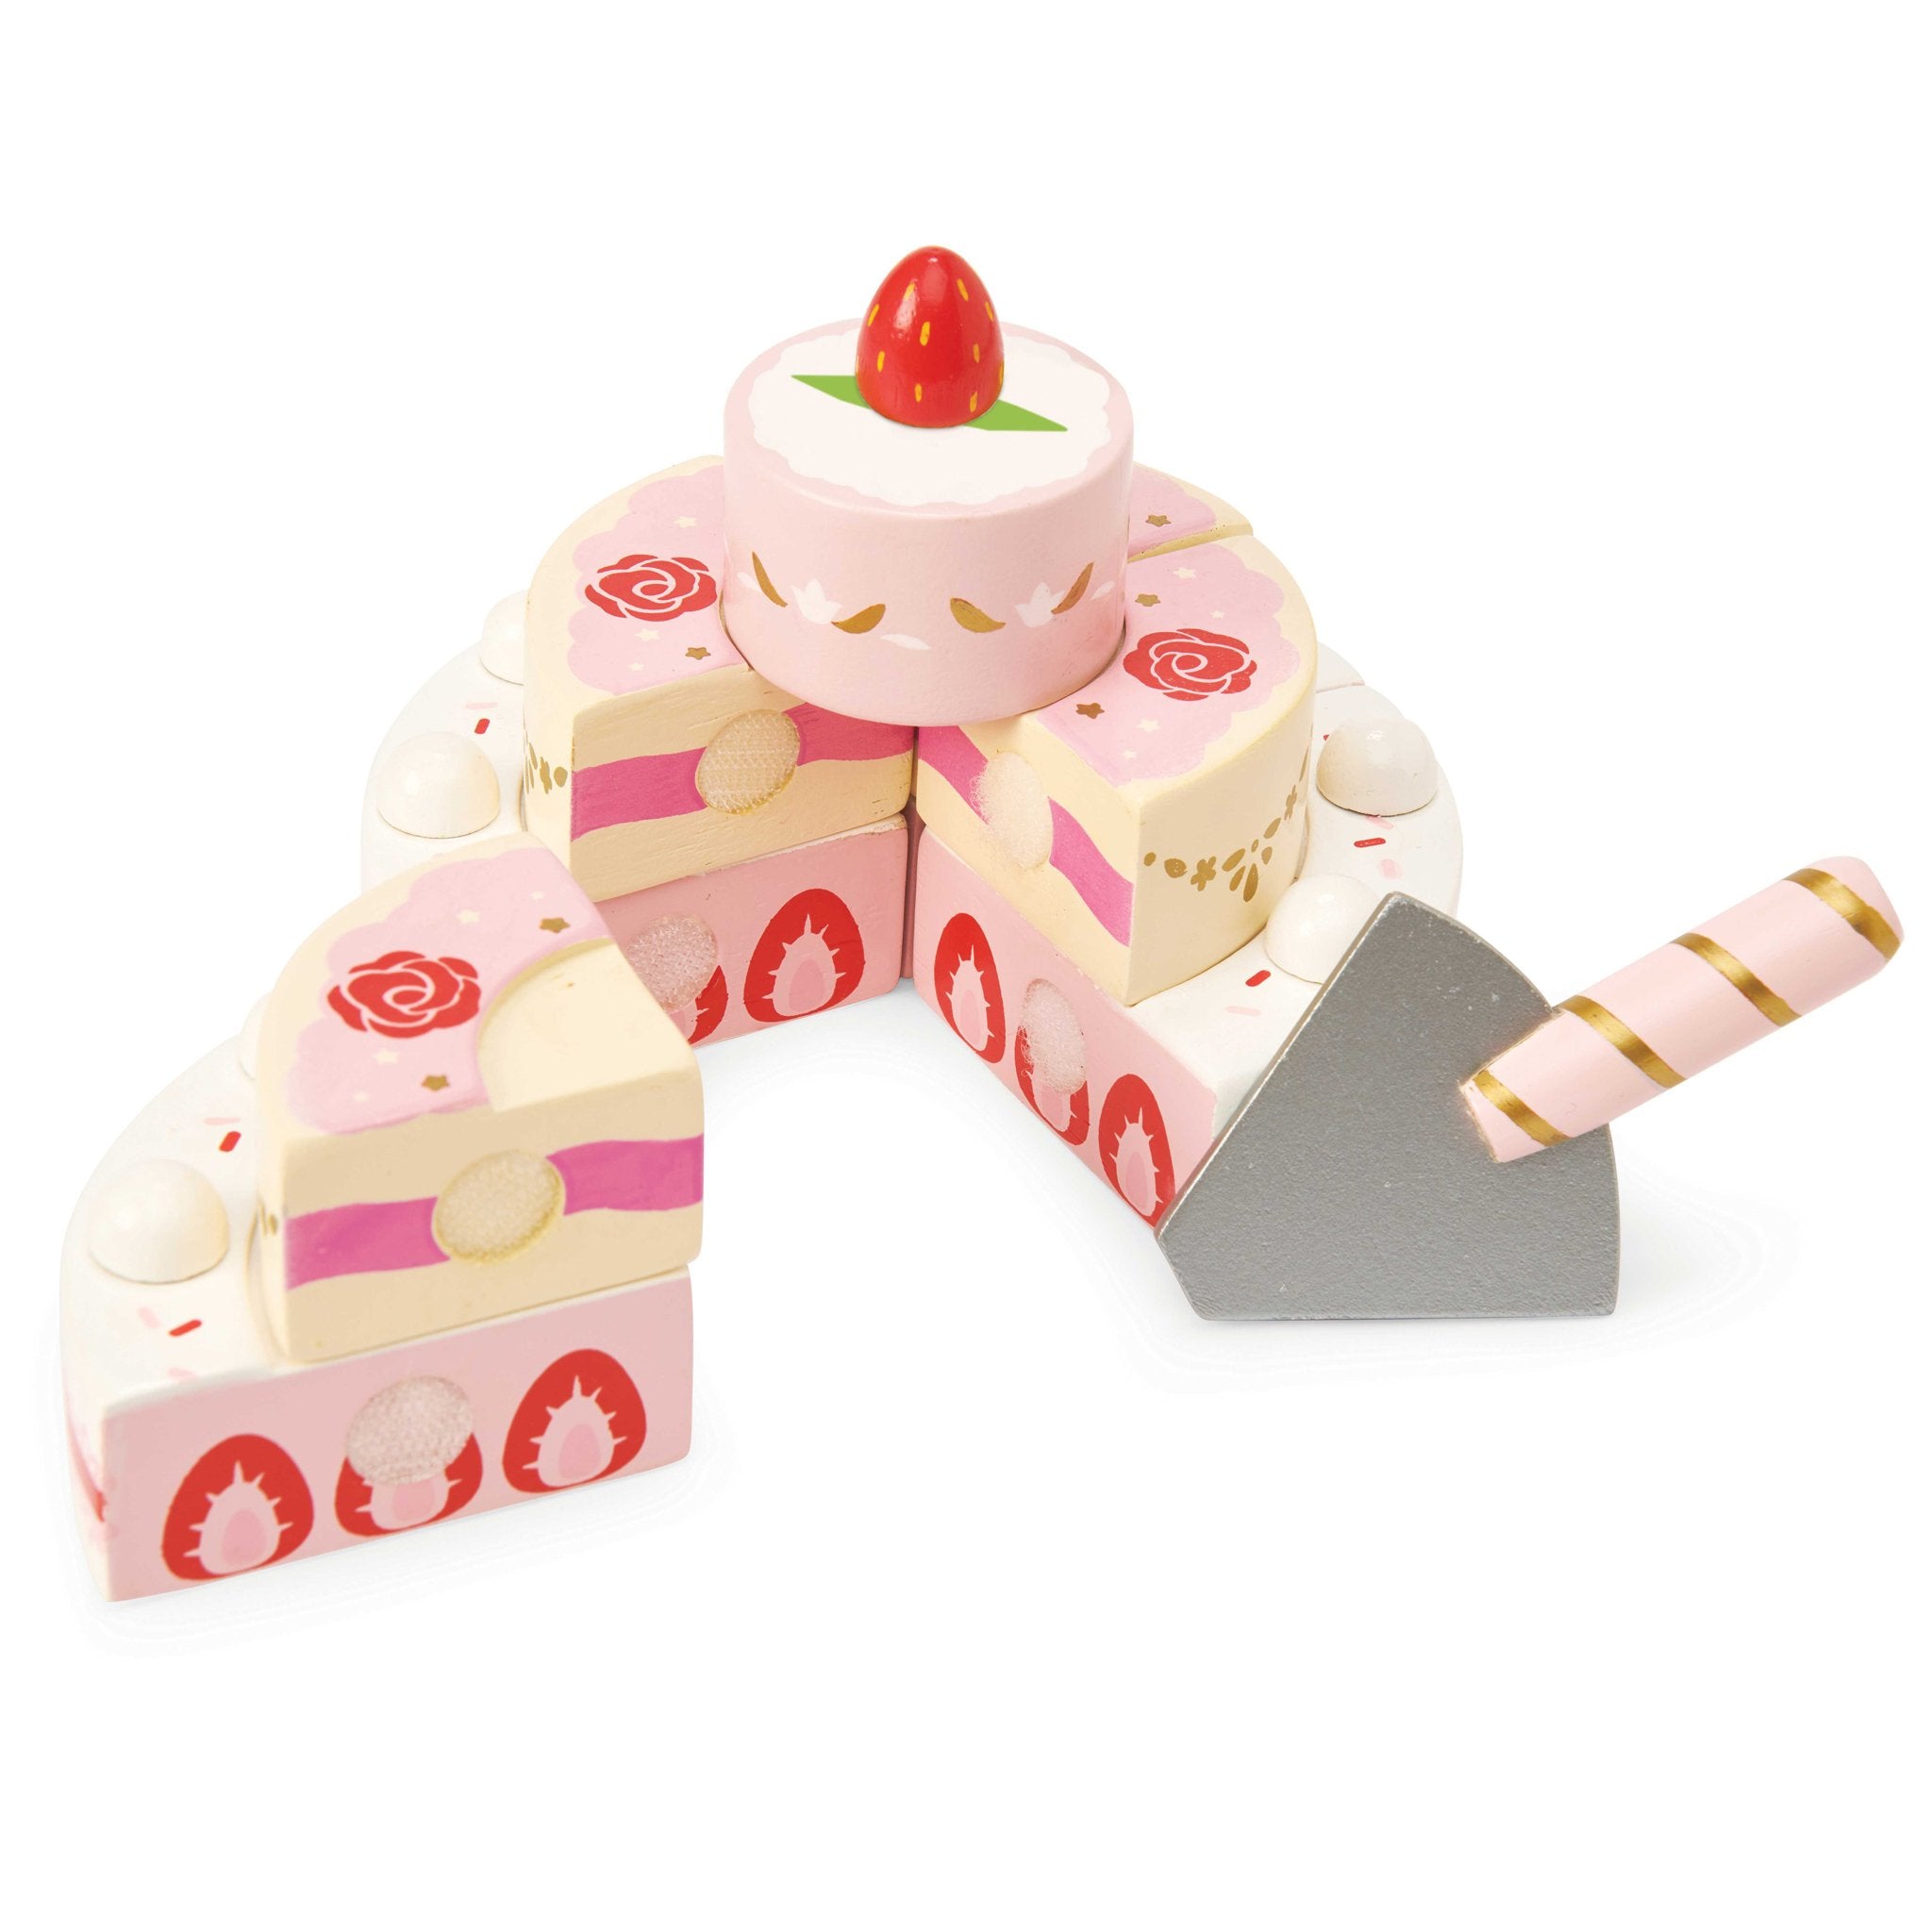 Strawberry Wedding Cake, Toy - Le Toy Van